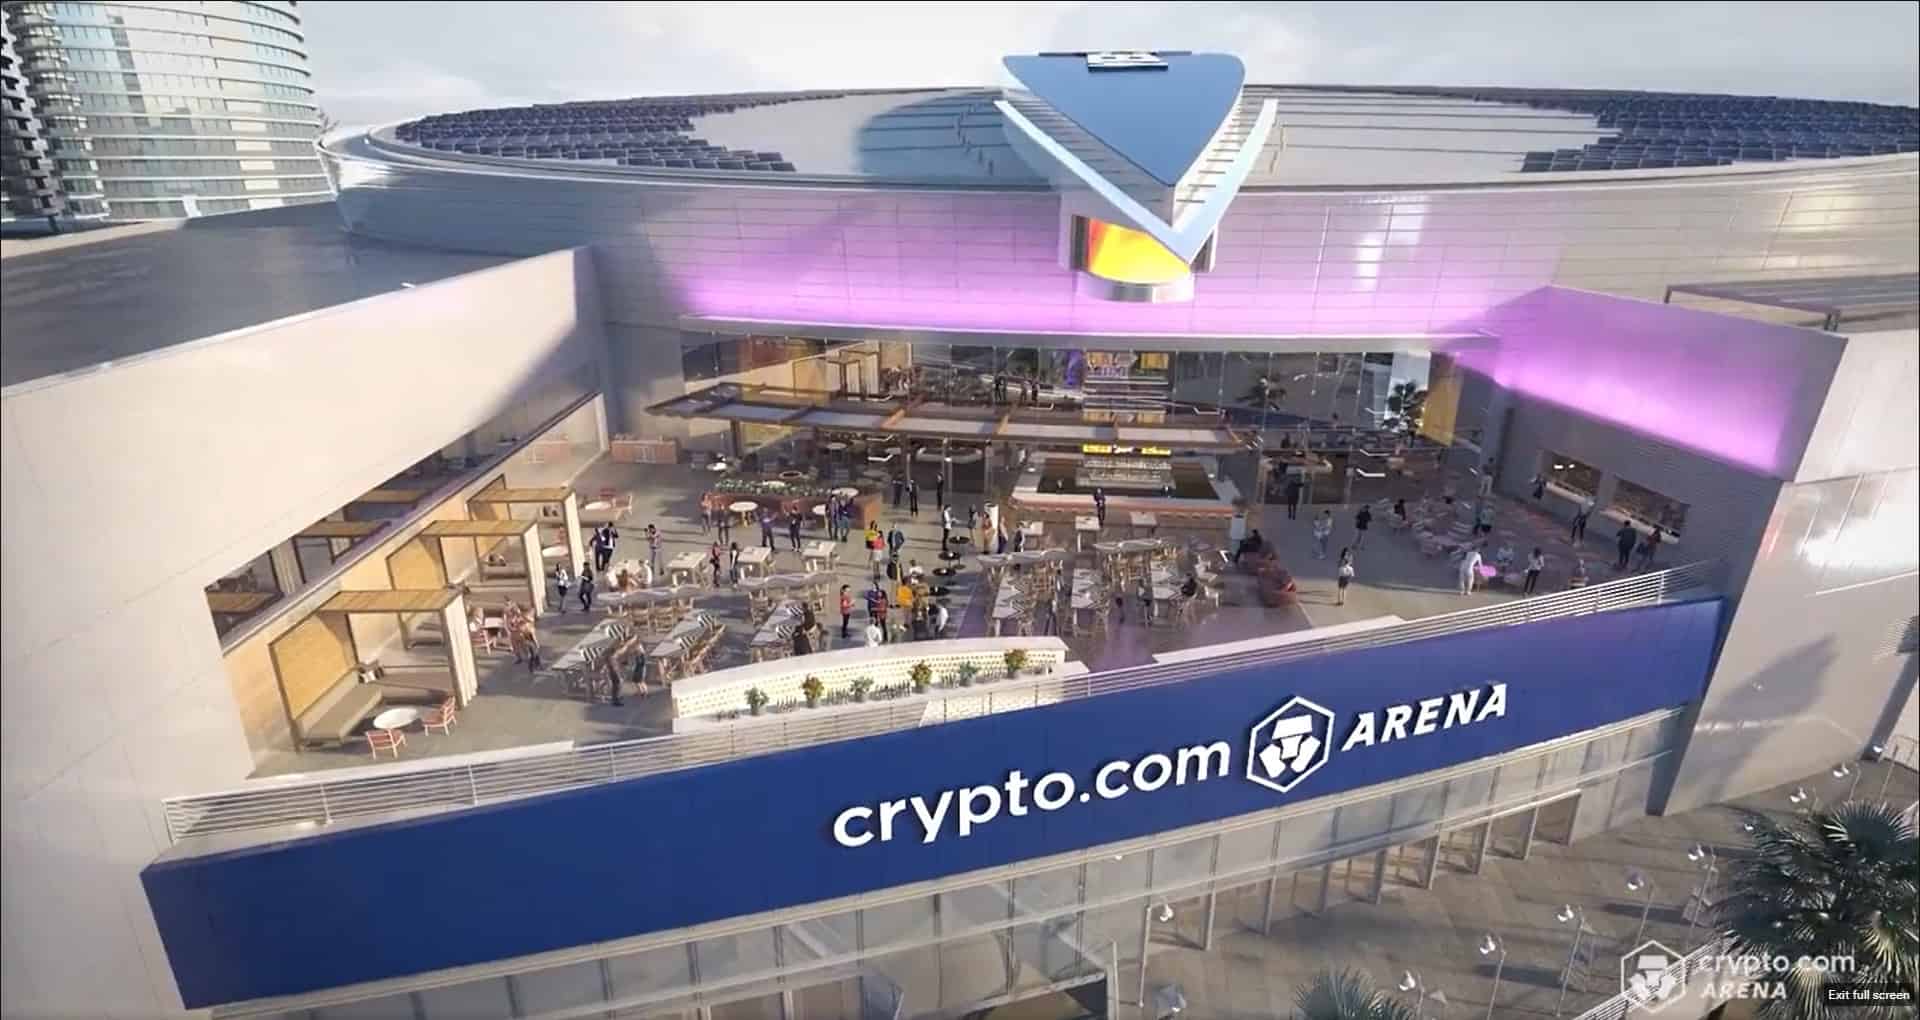 Cryptocom-announces-“nine-figure-investment”-to-overhaul-its-stadium